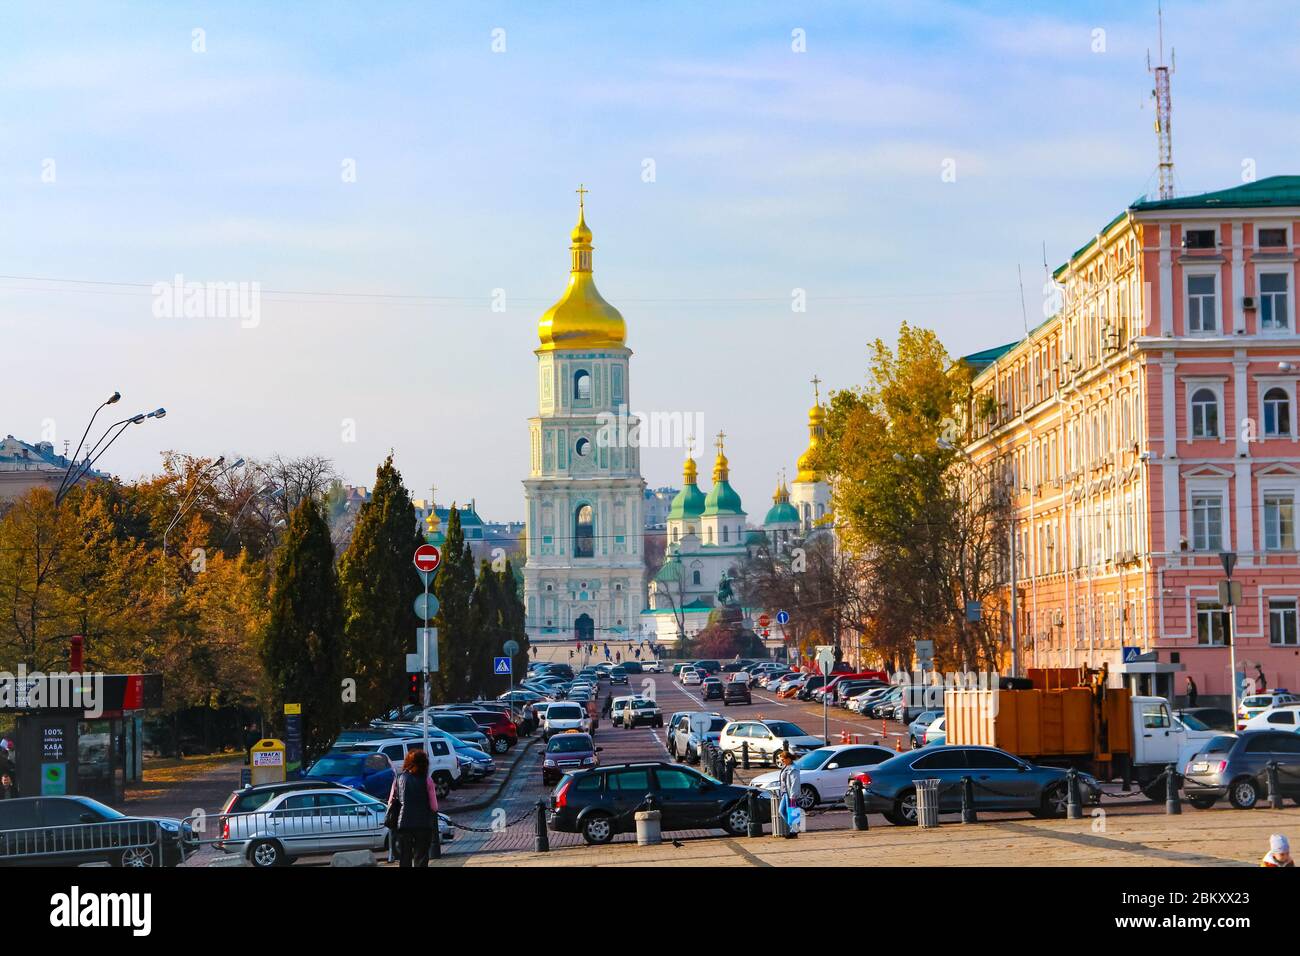 Straßenszene in Kiew, Ukraine, mit Hagia Sophia Kathedrale Komplex, ein UNESCO-Weltkulturerbe der ukrainischen Hauptstadt. Stockfoto